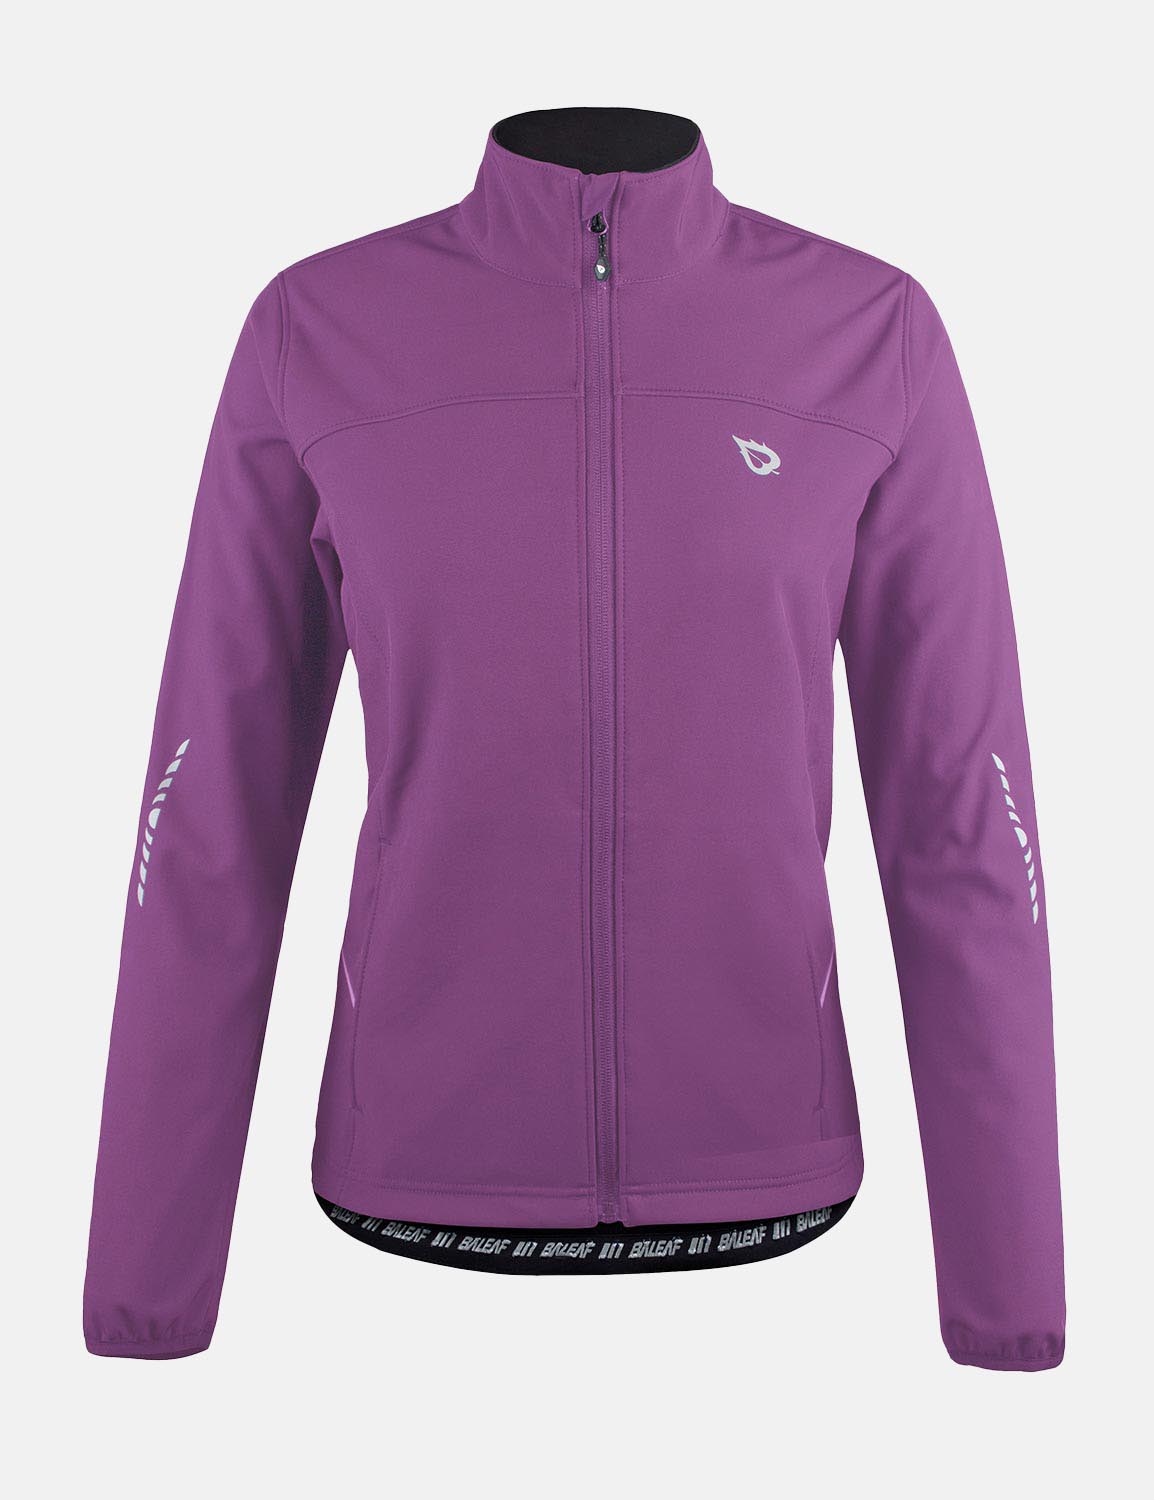 Baleaf Women's Wind- & Waterproof Thermal Long Sleeved Cycling Jacket aaa464 Hyacinth Violet Front